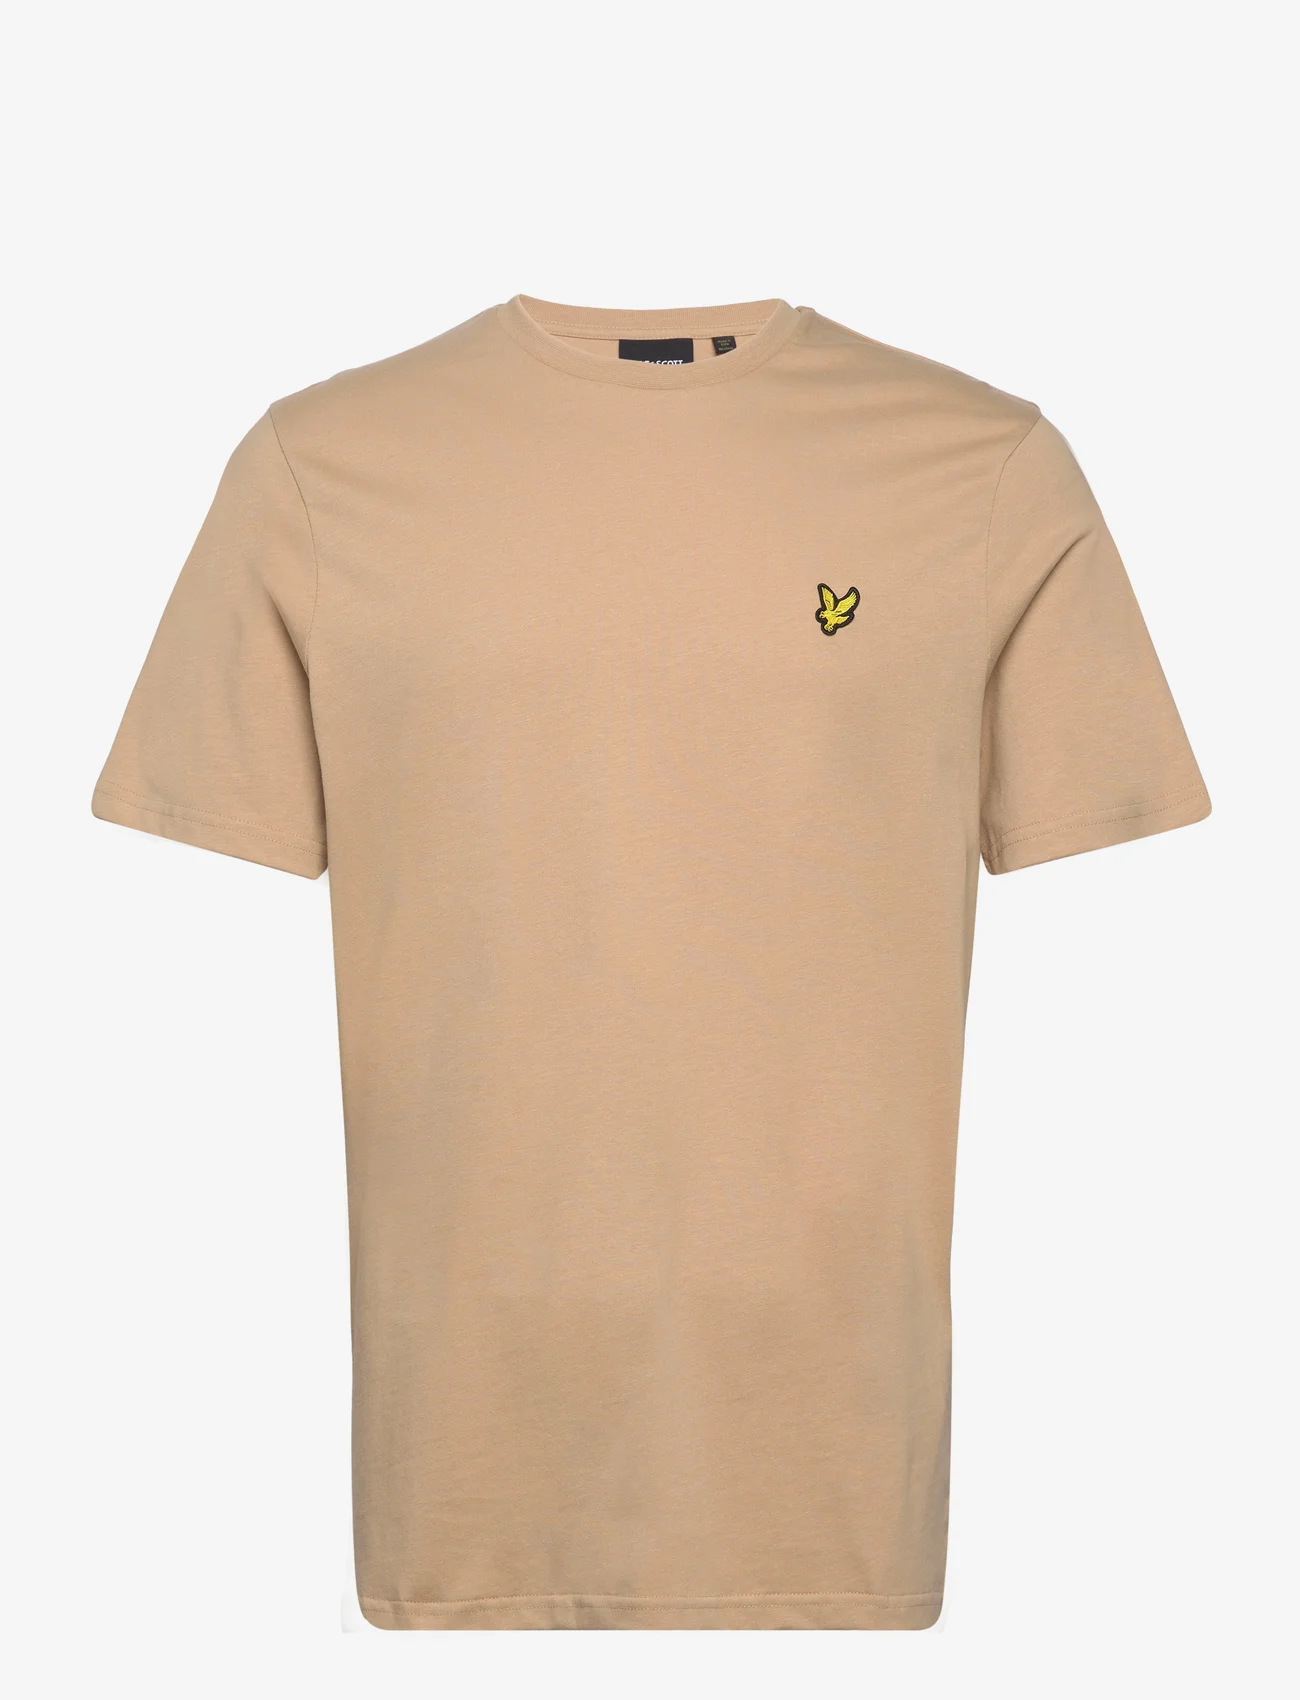 Lyle & Scott - Plain T-Shirt - lägsta priserna - w996 cairngorms khaki - 0